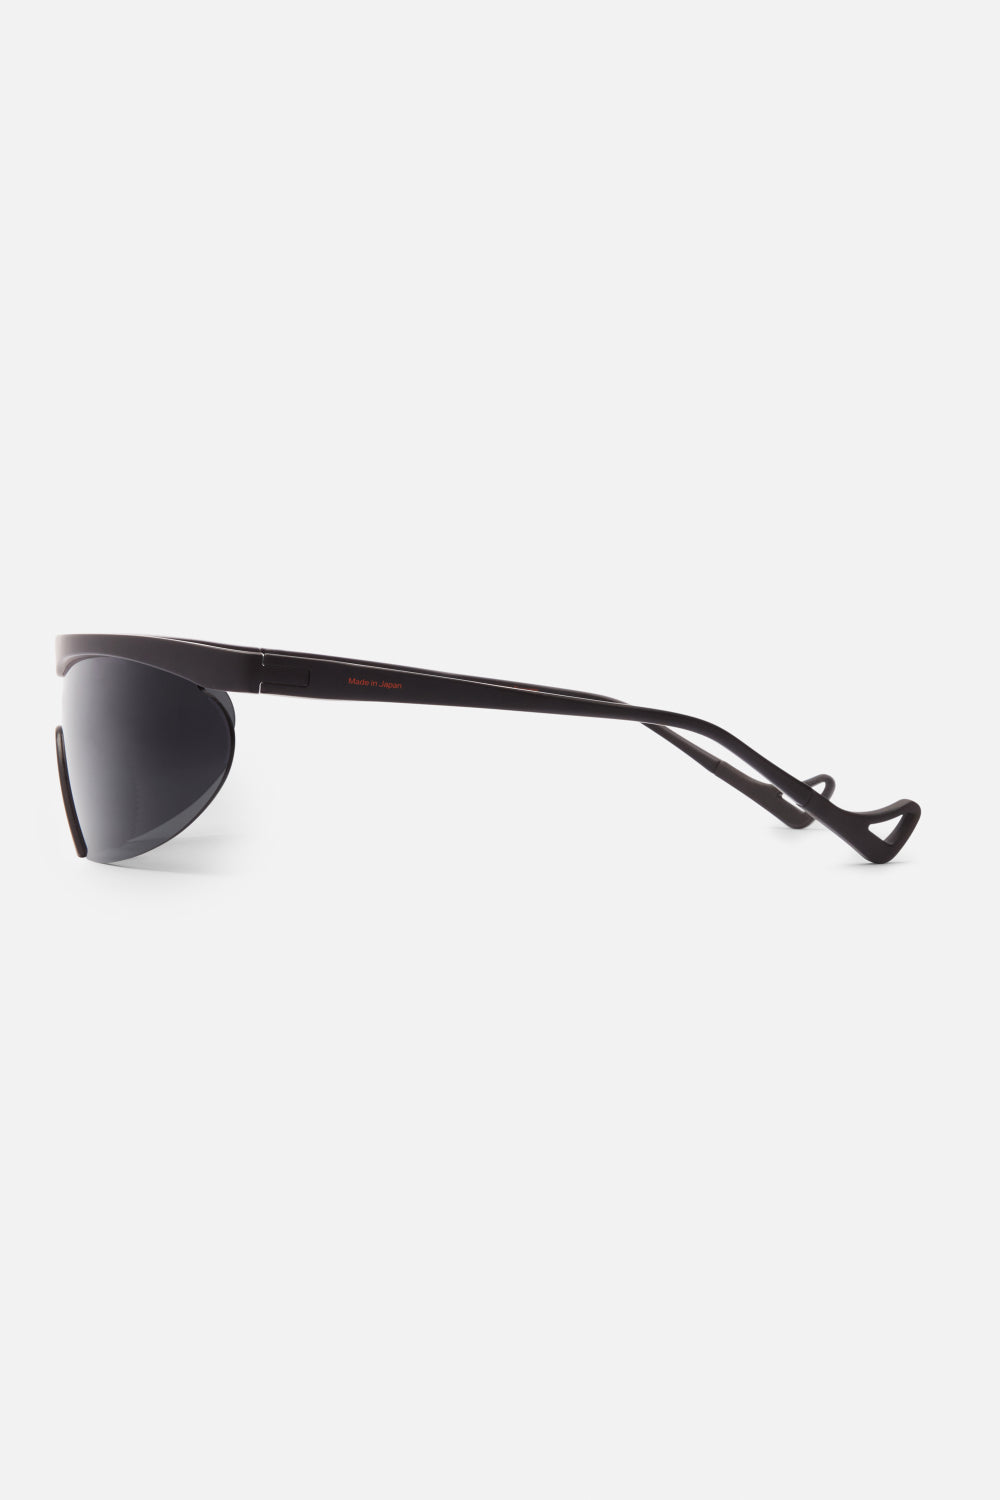 District Vision Koharu Eclipse Sunglasses - Black/D+ Onyx Mirror | Coffee Outdoors